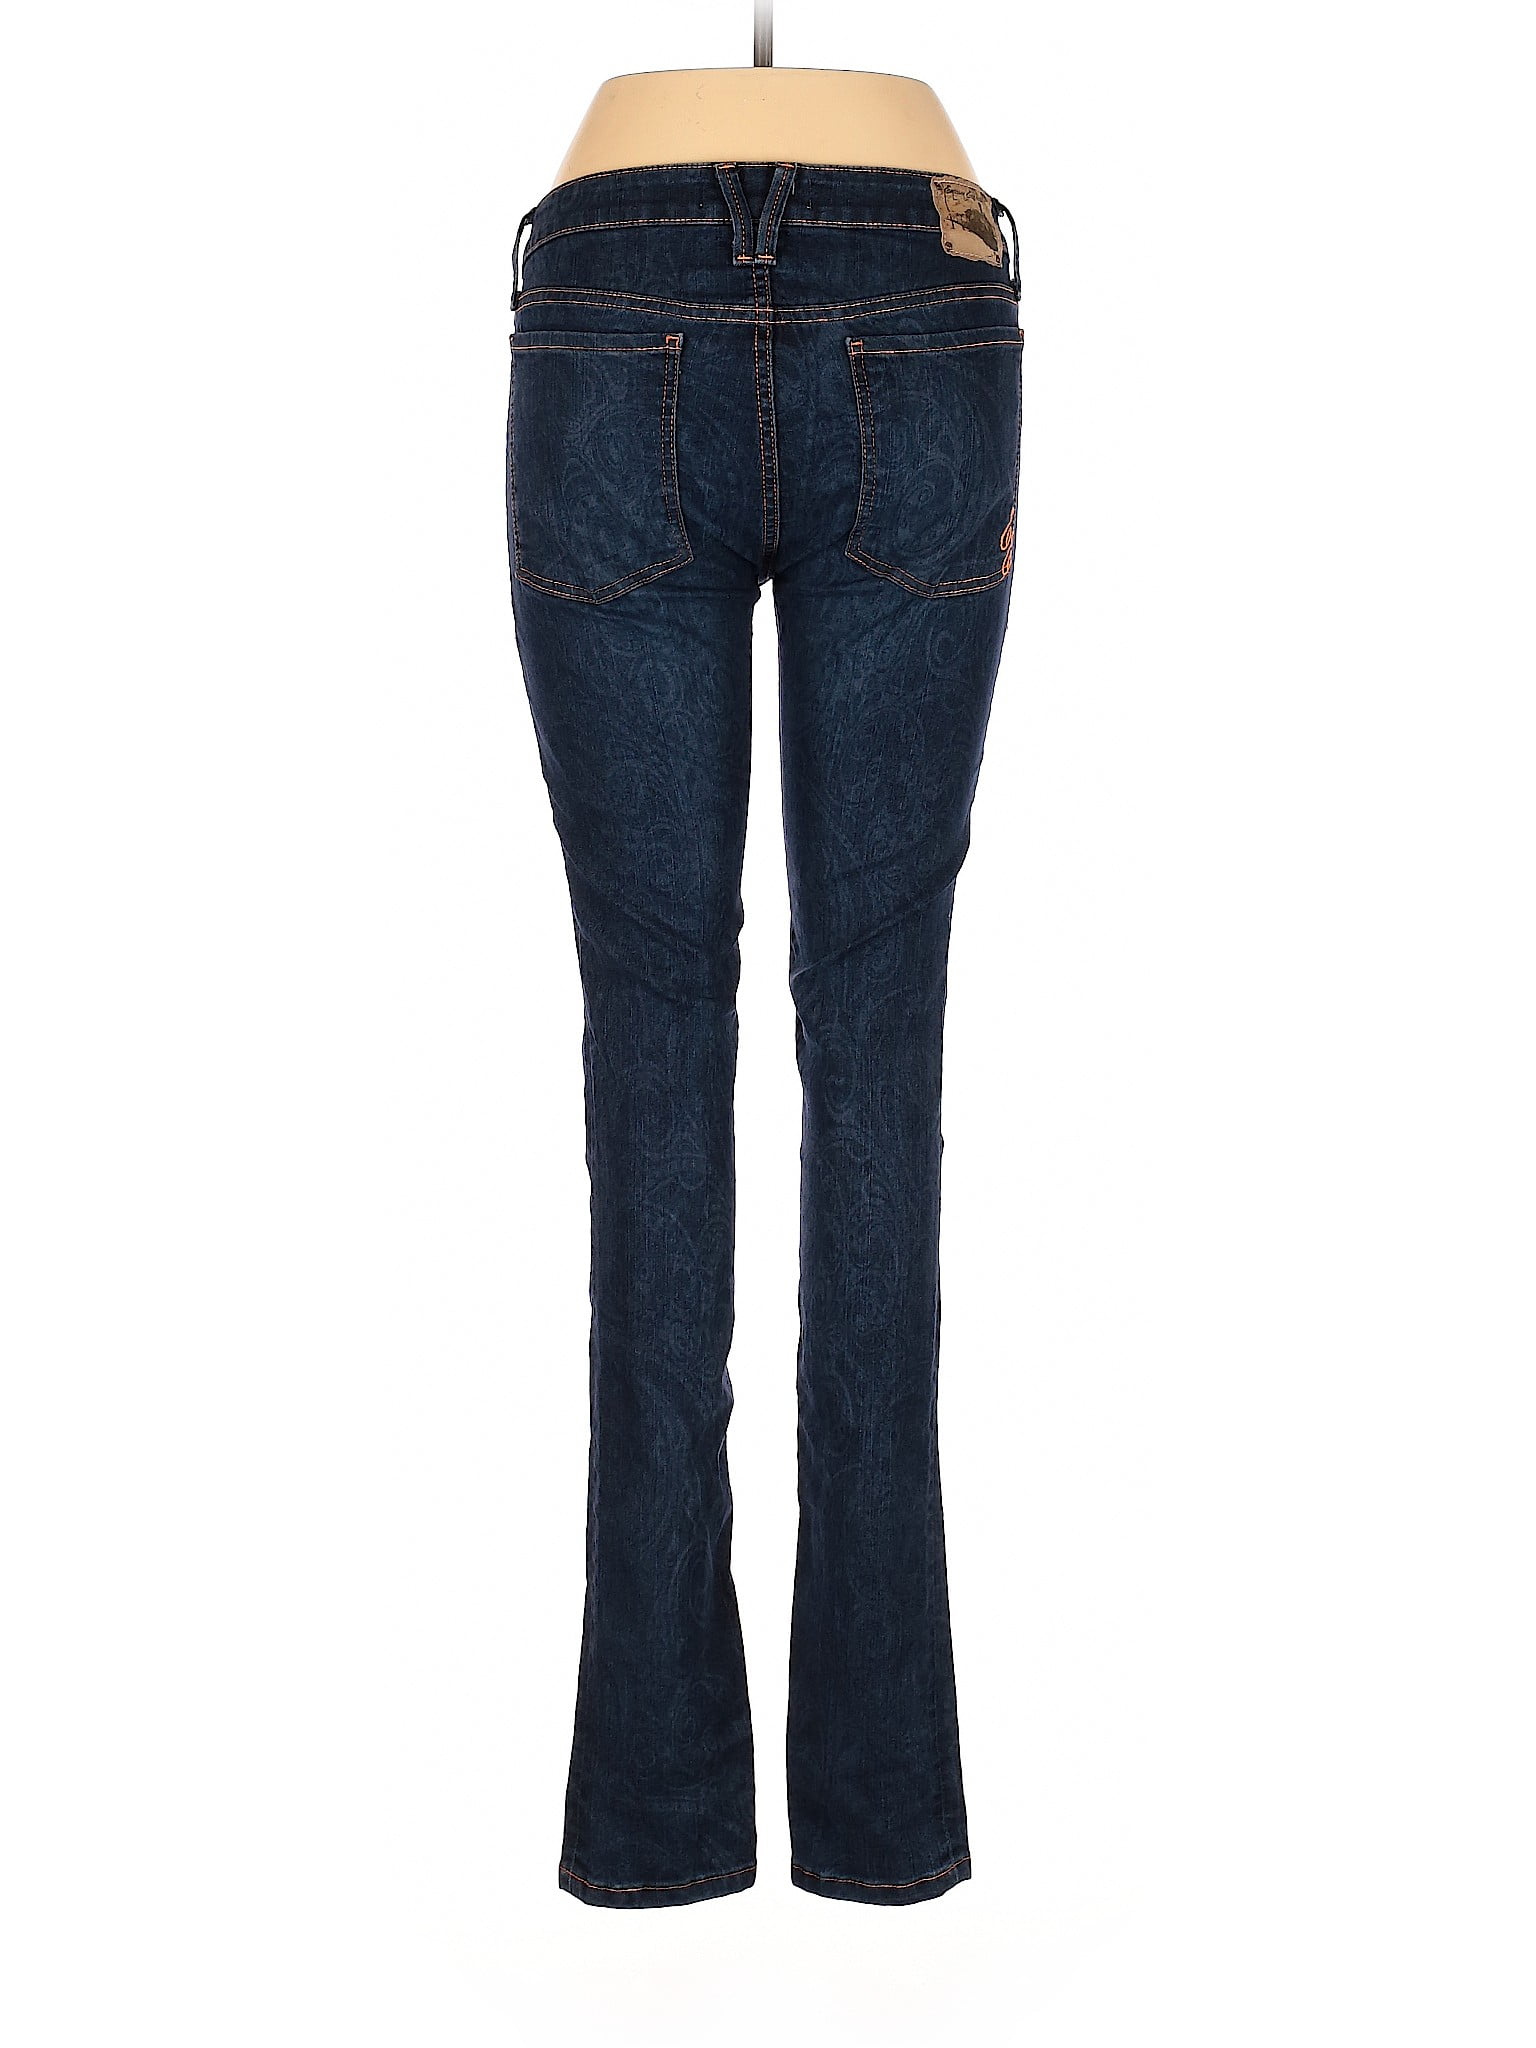 emerson edwards jeans